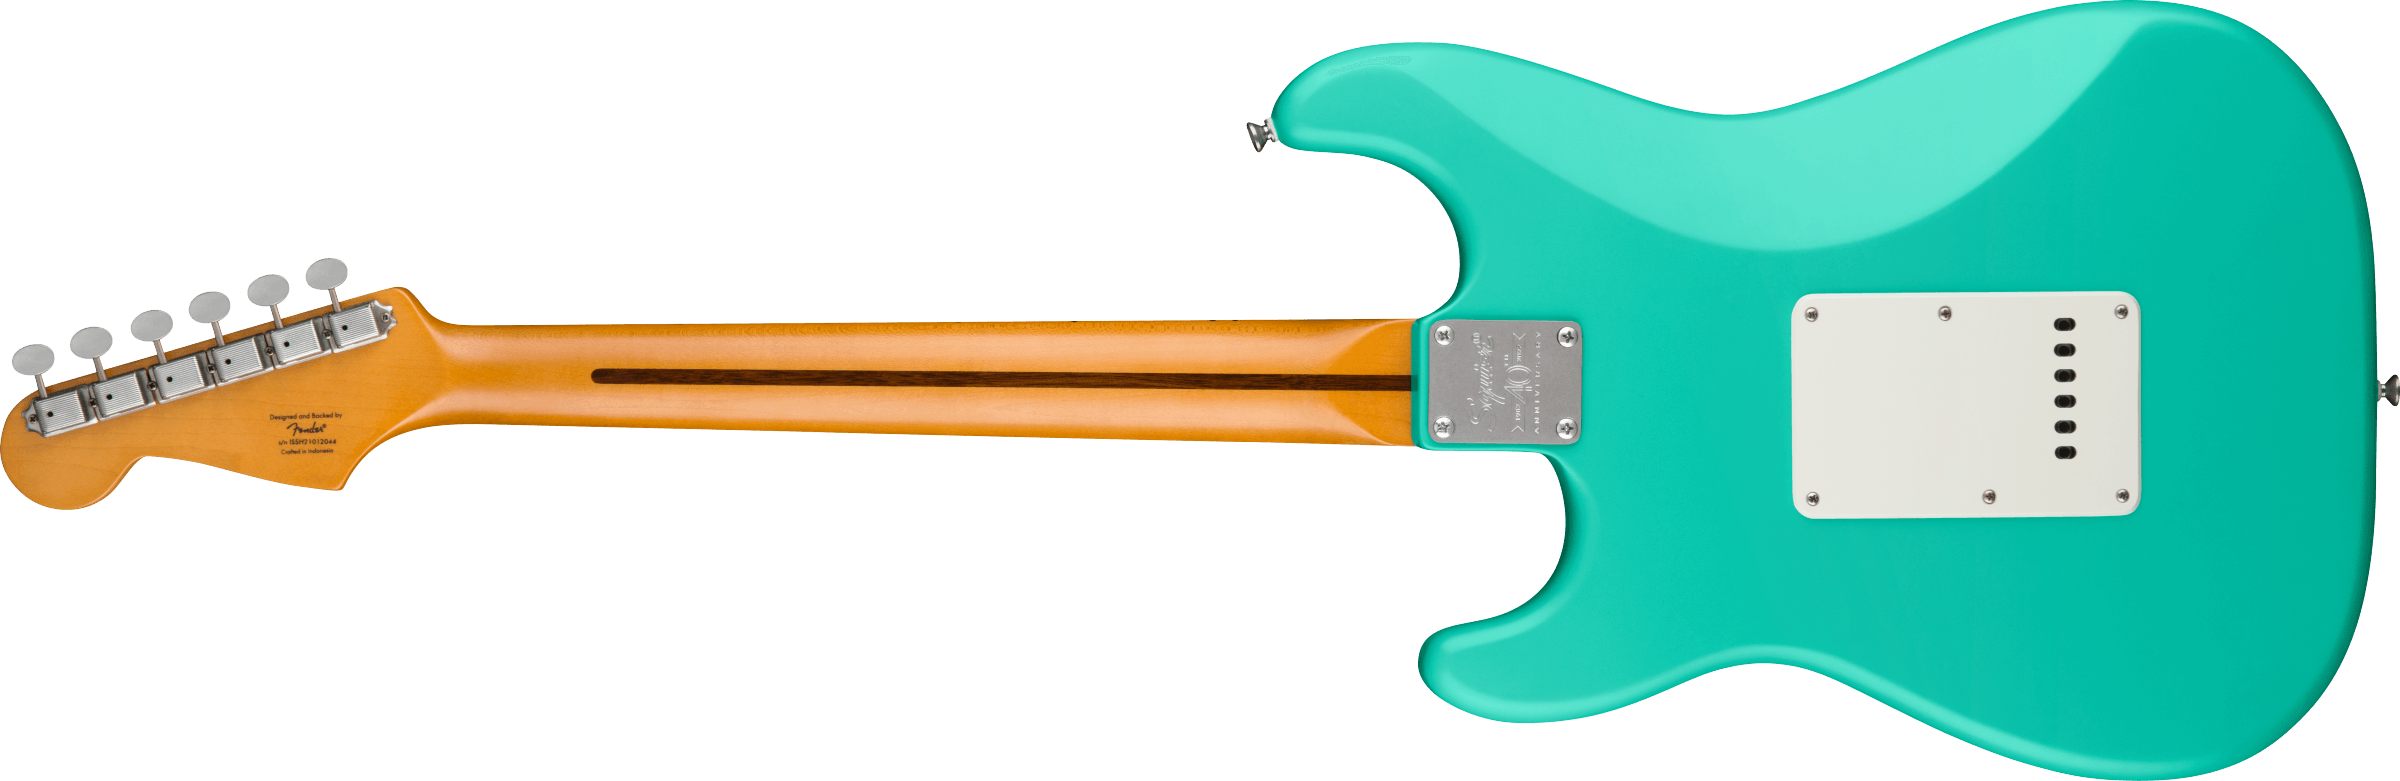 Squier Strat 40th Anniversary Vintage Edition Mn - Satin Seafoam Green - E-Gitarre in Str-Form - Variation 1